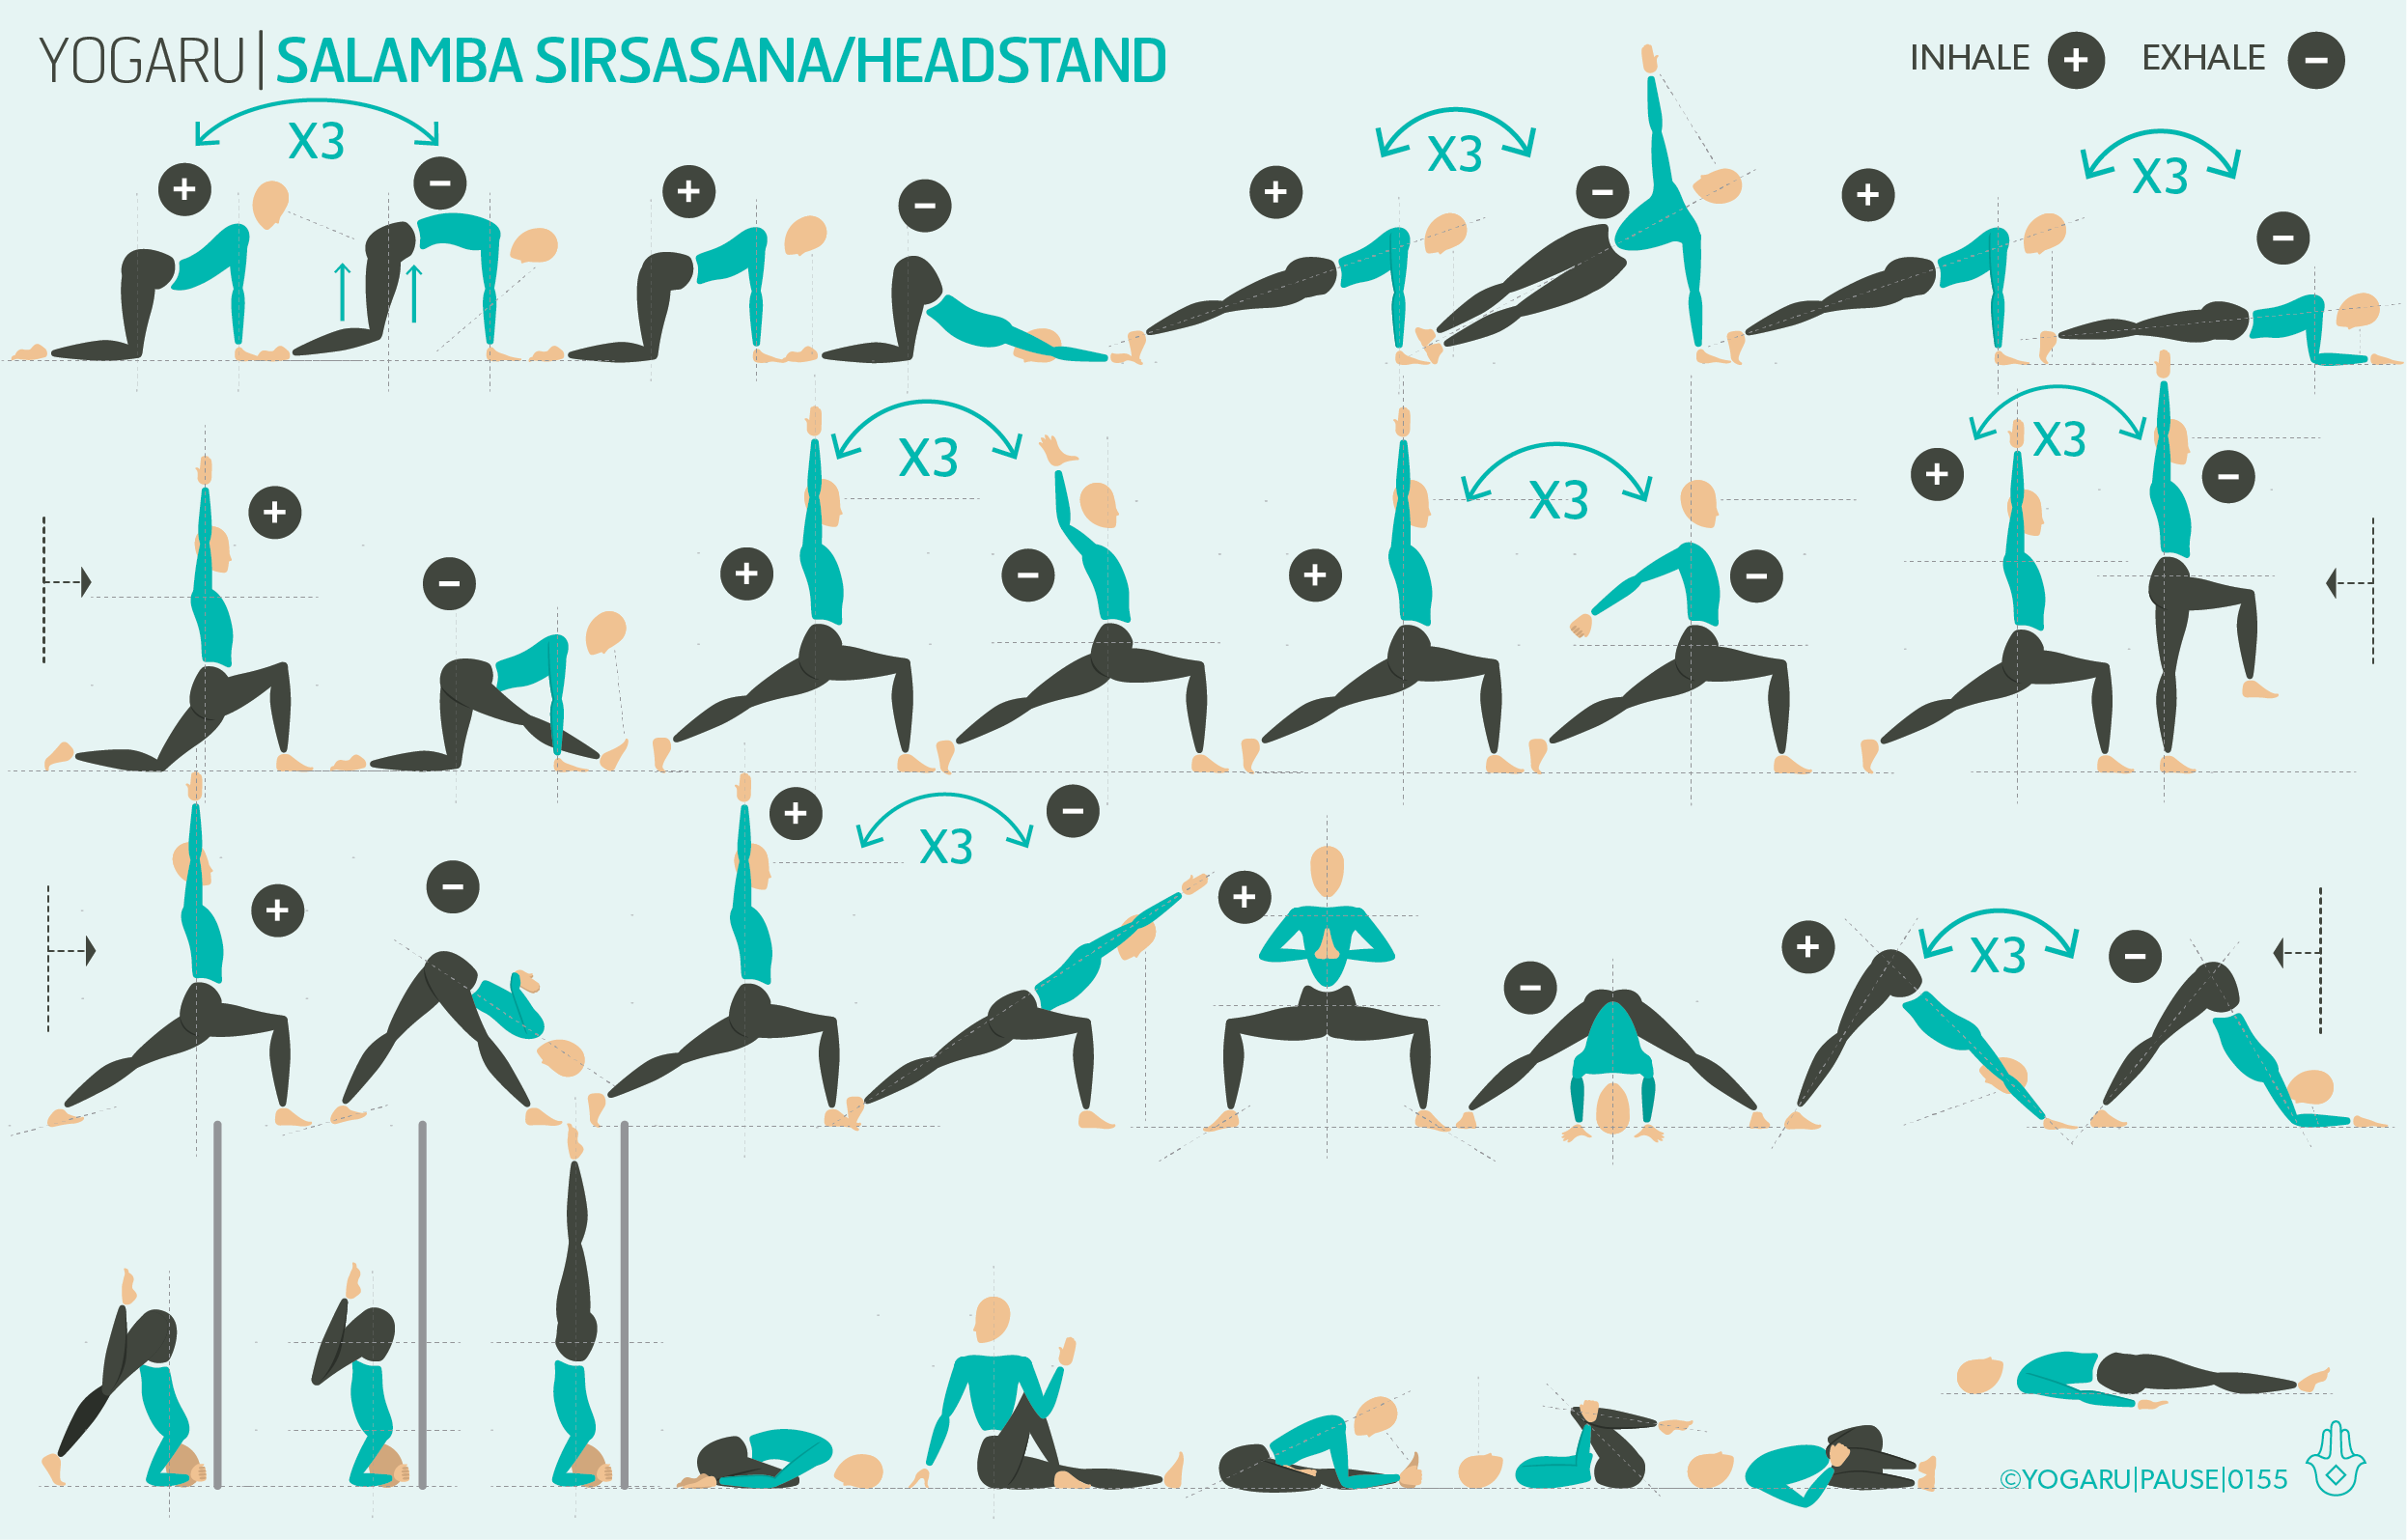 Ardha Sirsasana - Half Hand Stand - Steps And Benefits